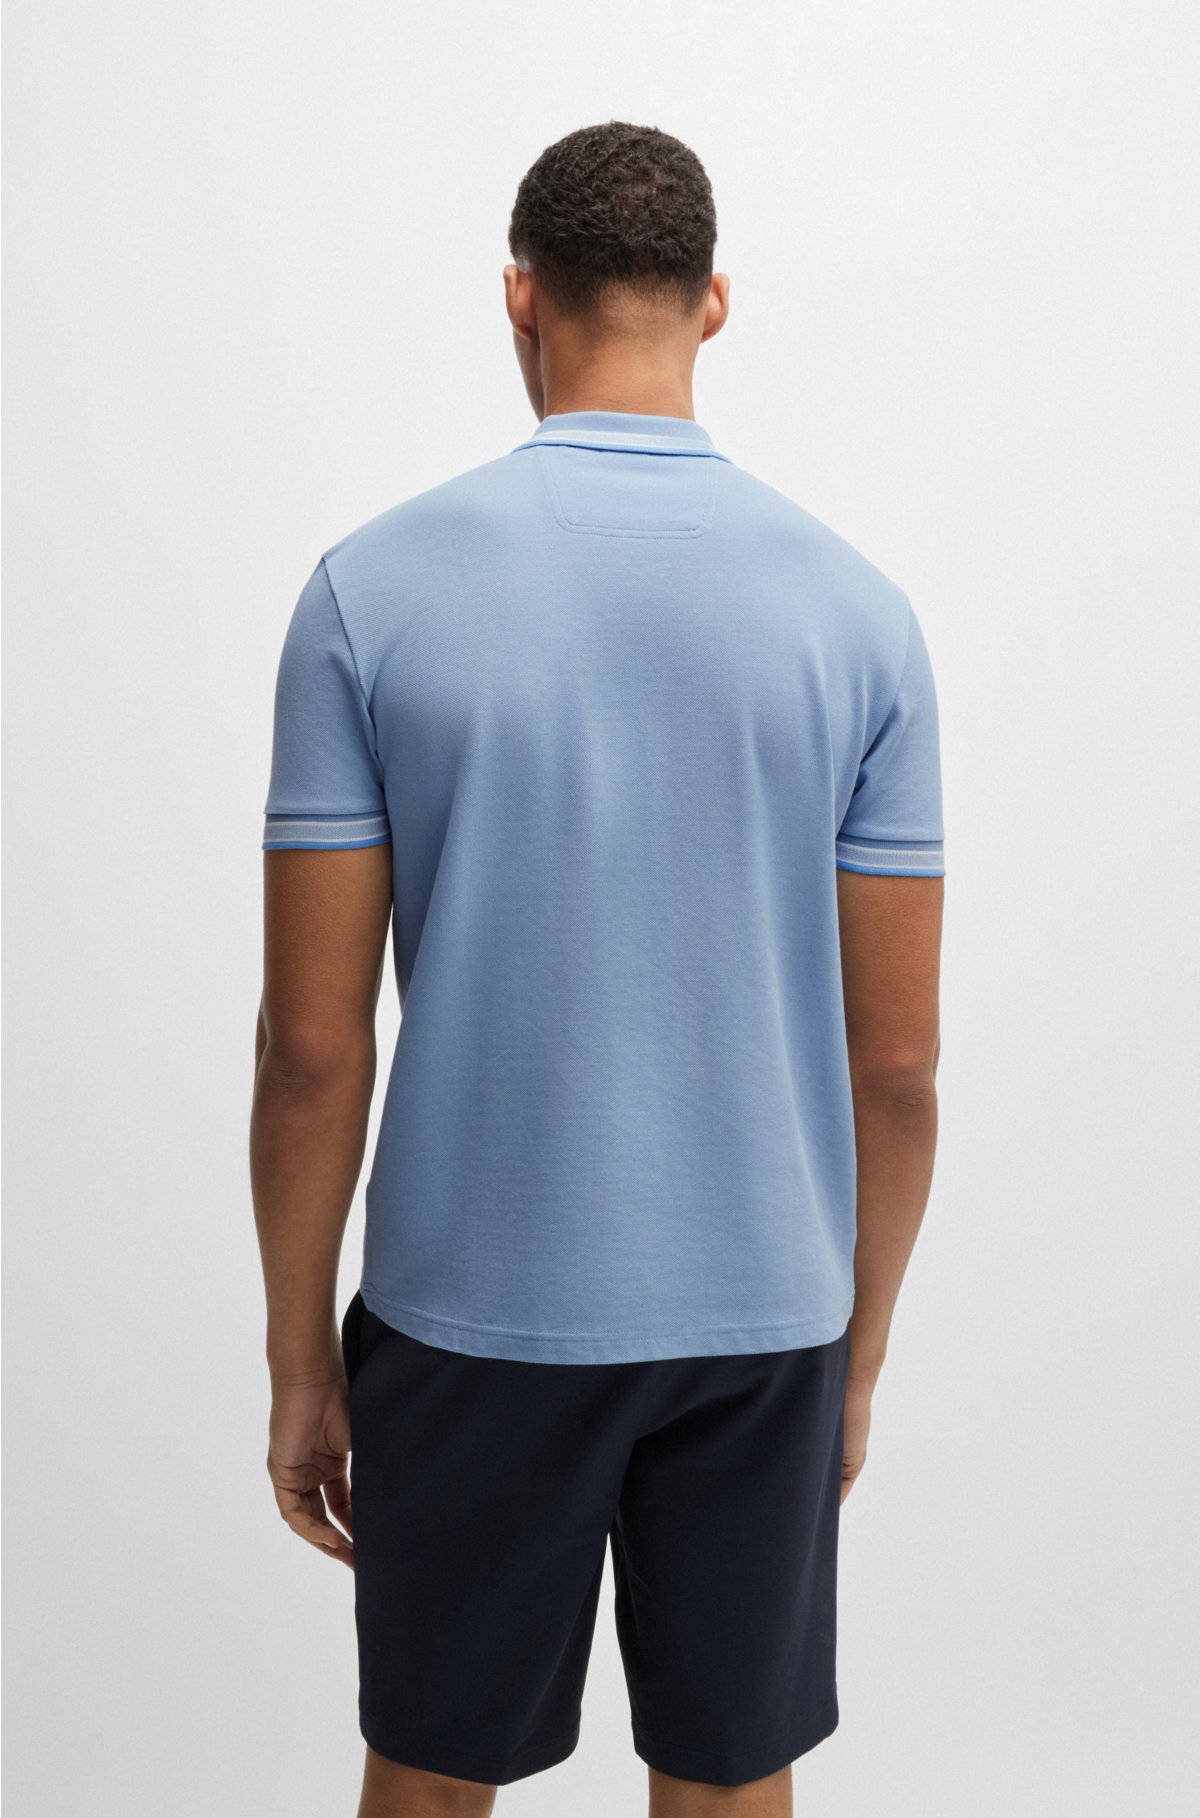 Cotton-piqué Paddy polo shirt with contrast logo, Light Blue